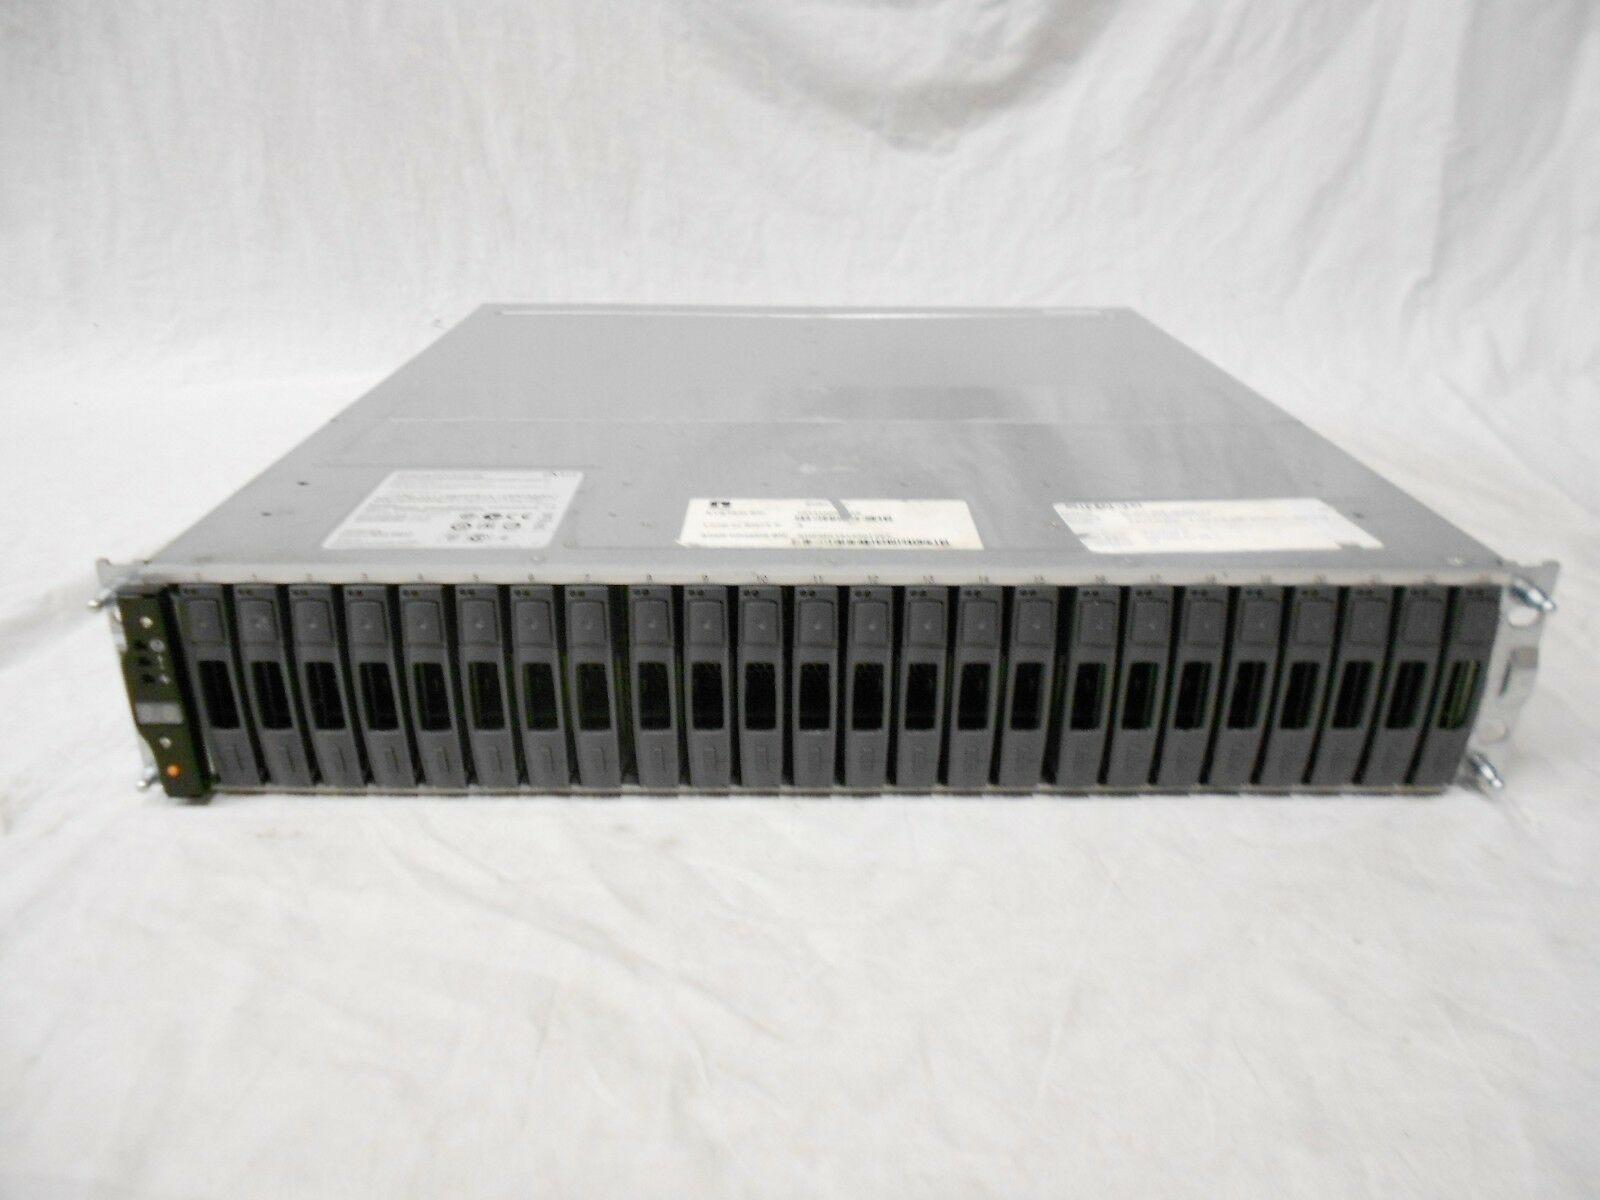 Netapp Ds2246 Storage Expansion Array 24 Bay 2.5" Sas Trays 2x Iom6 Controllers